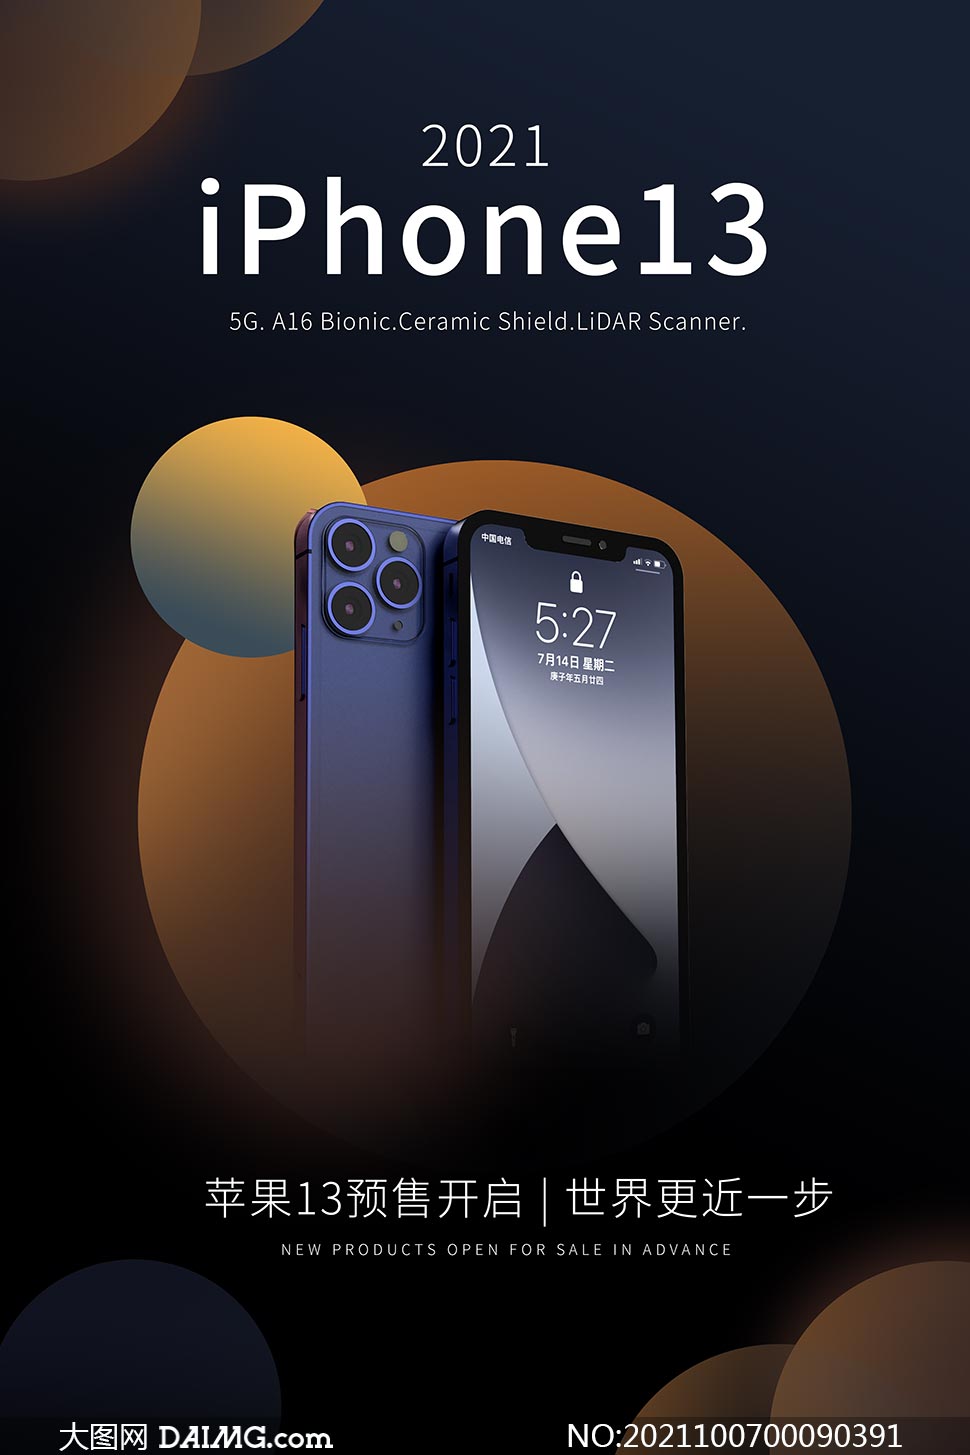 iphone13苹果手机预售活动海报psd素材